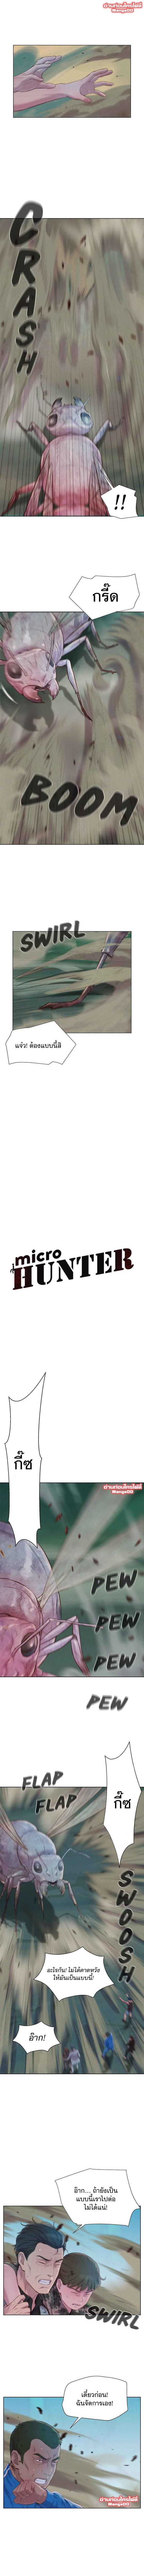 3CM Hunter 66 (1)